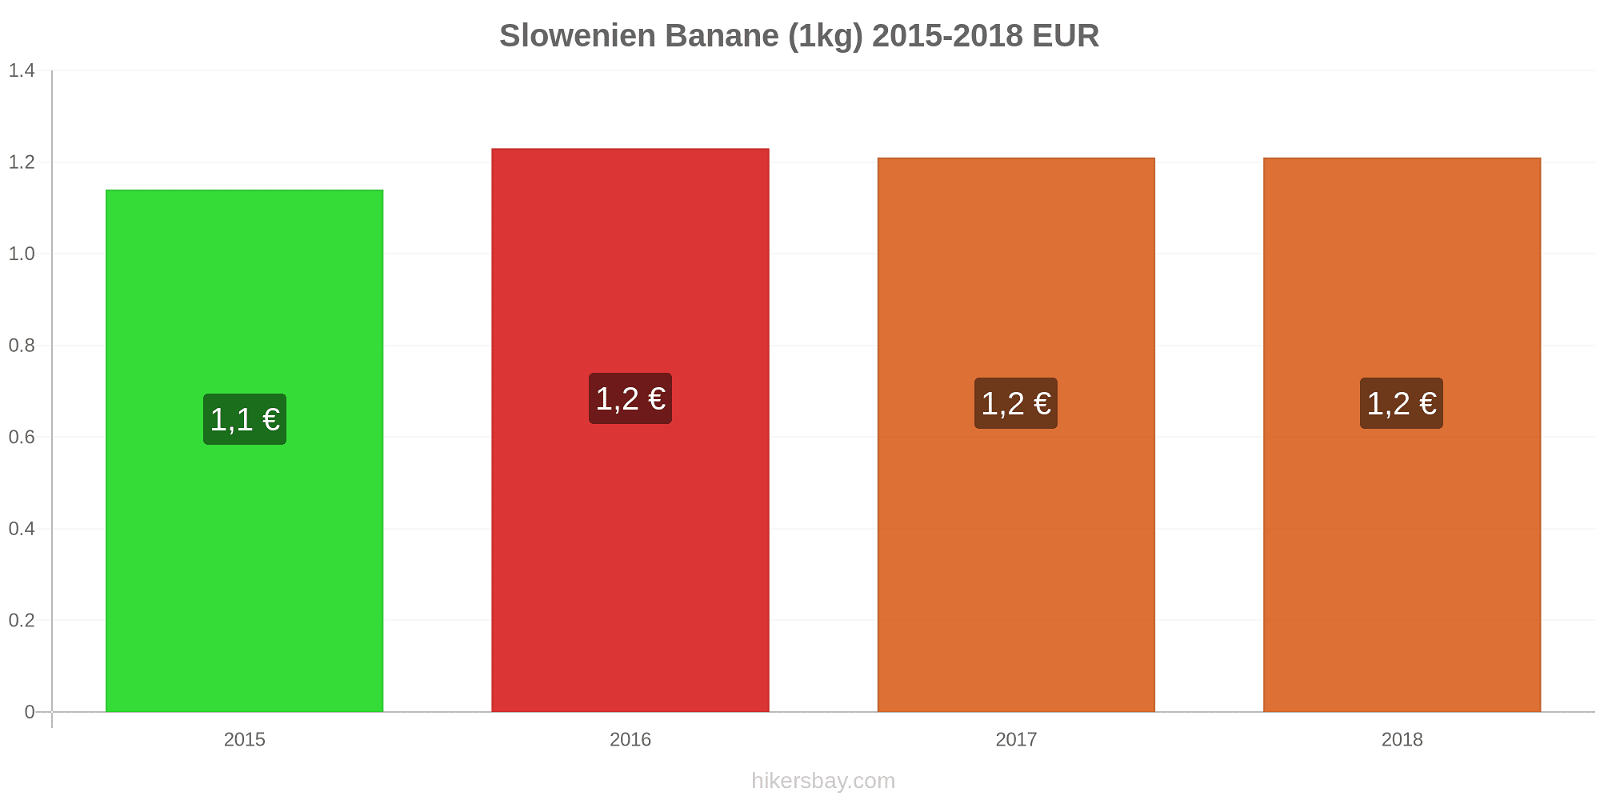 Slowenien Preisänderungen Bananen (1kg) hikersbay.com